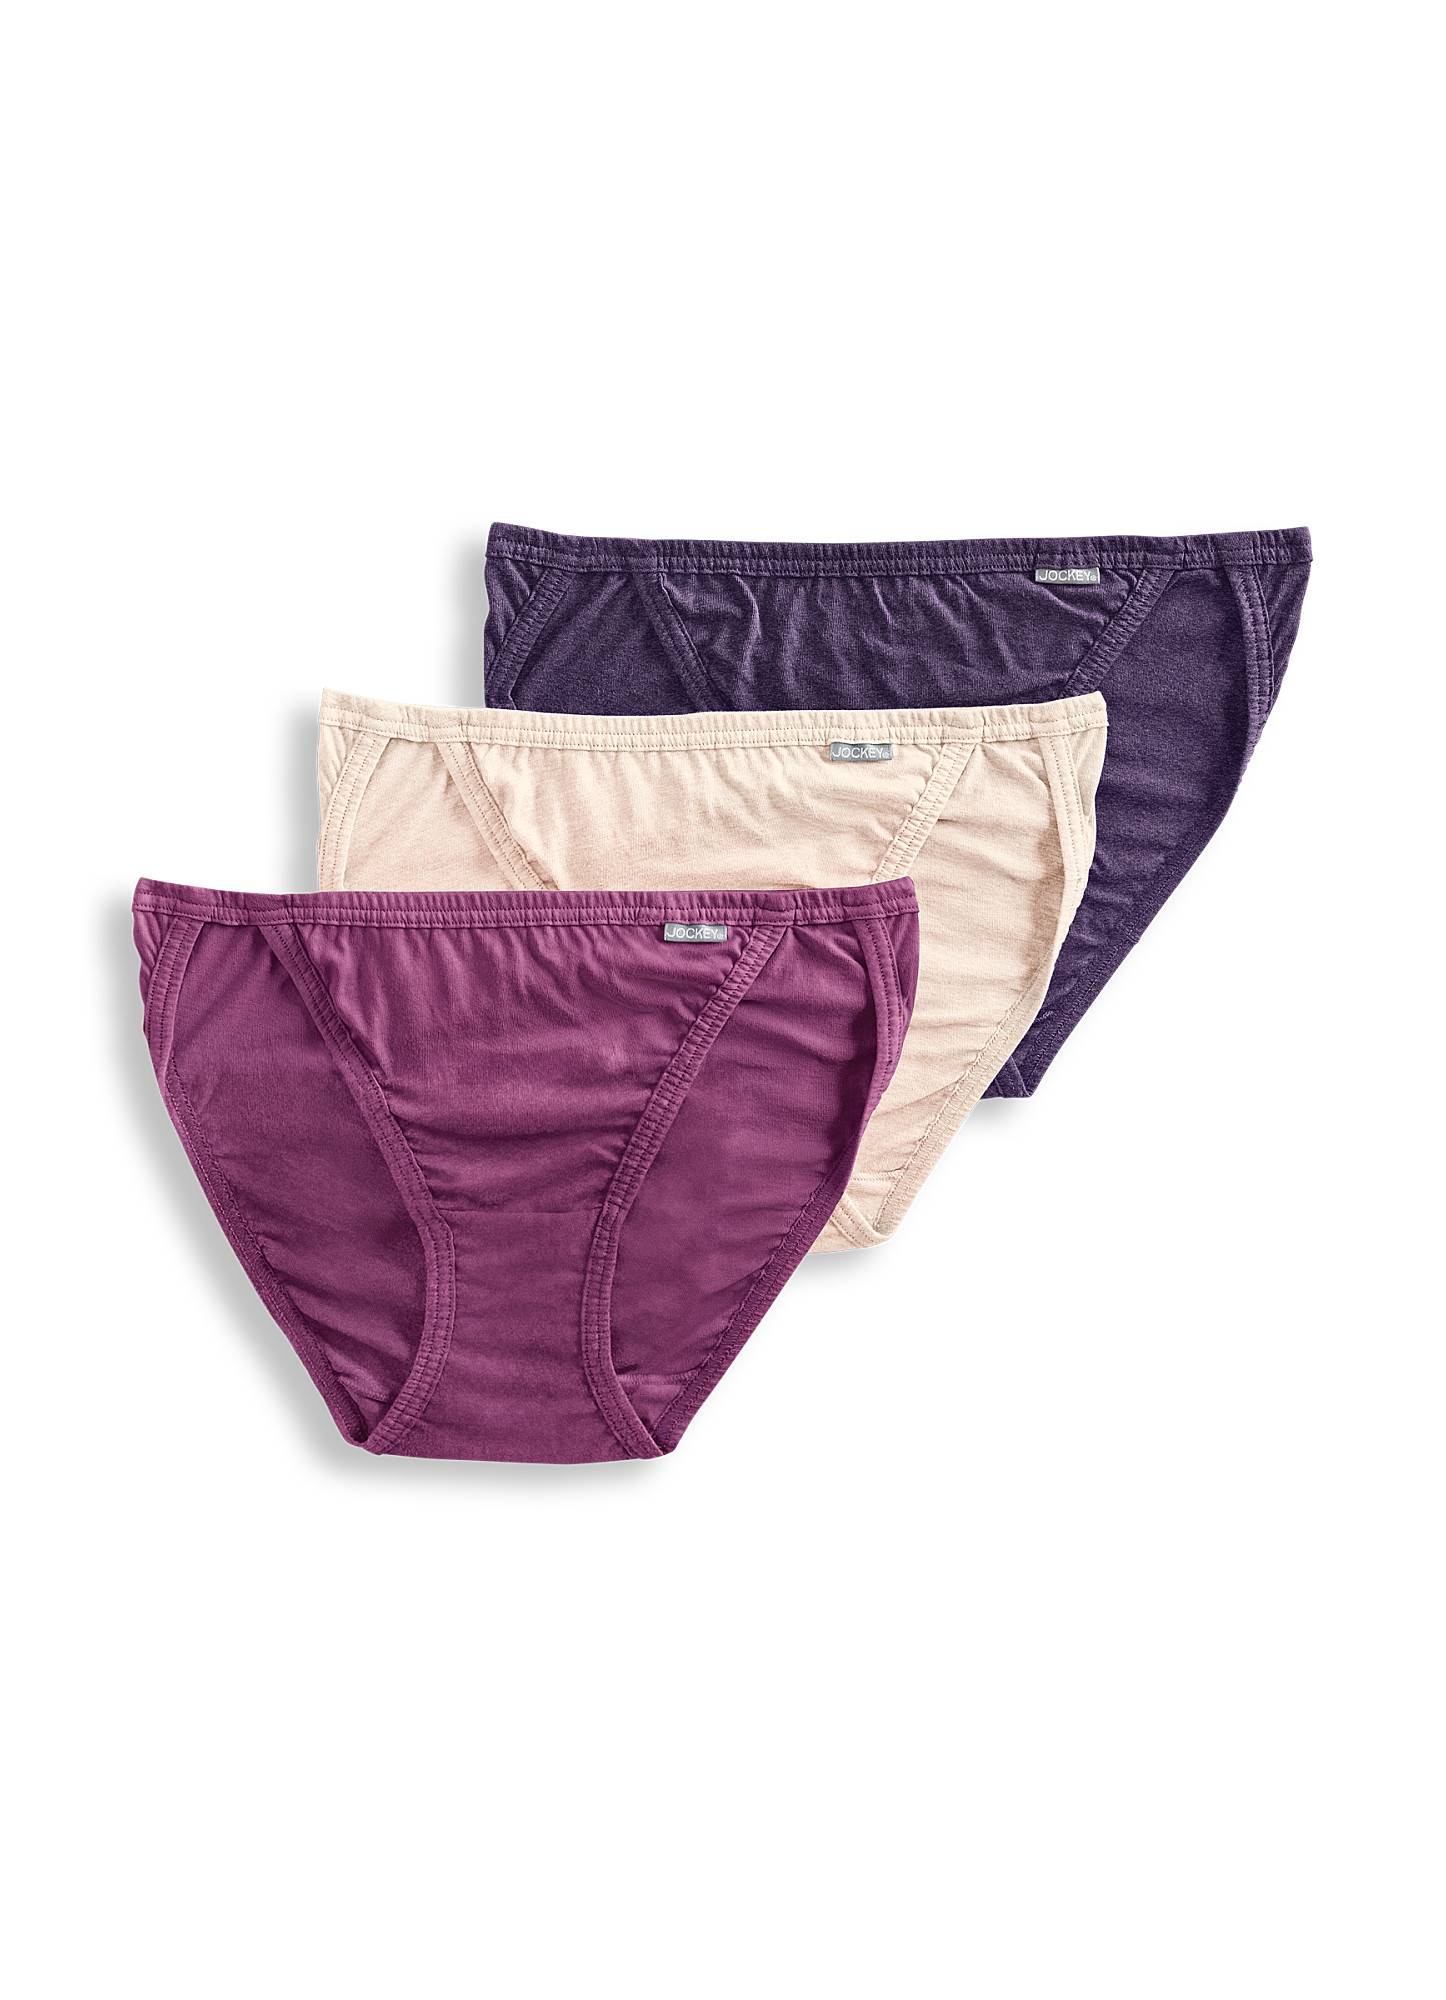 JOCKEY Panties ~ Women's Underwear Elance ~ STRING BIKINI ~ Style 1483 ~ Sz  6